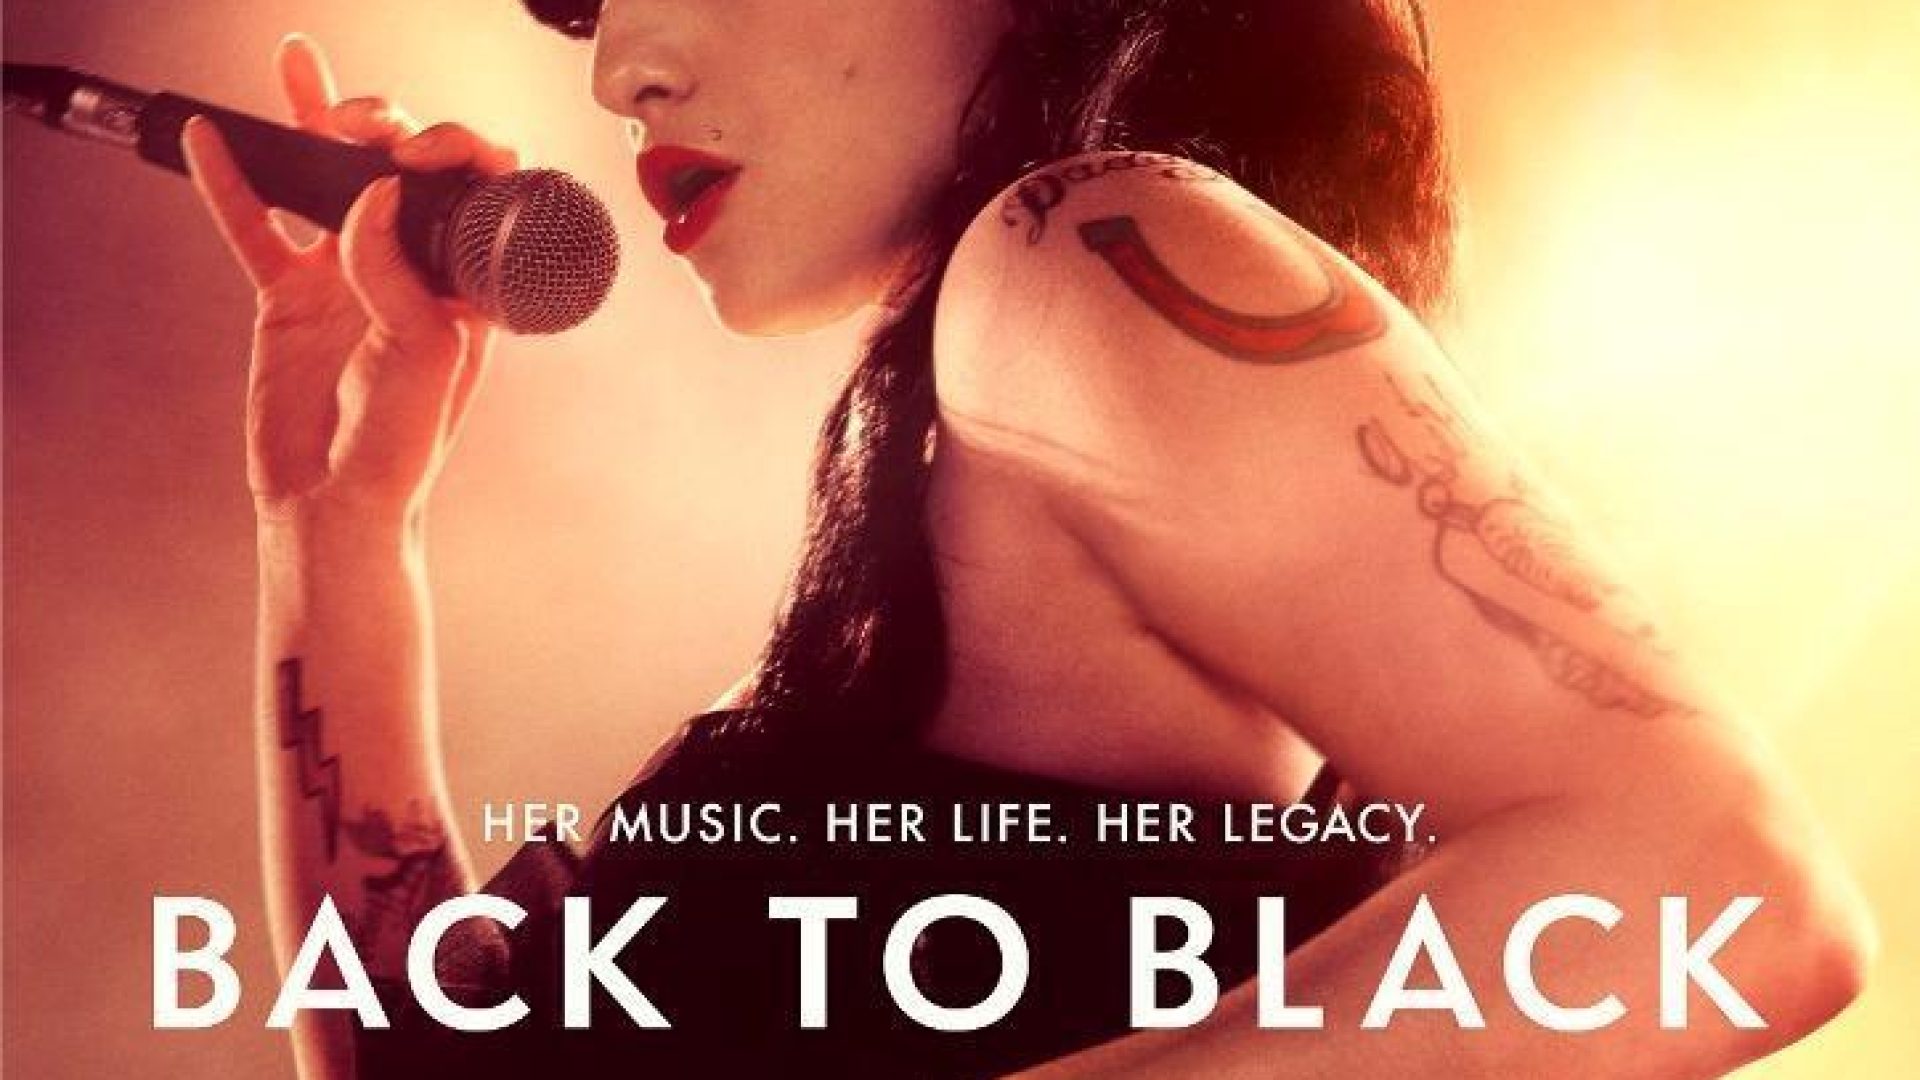 12. 05. Film “Back to black”